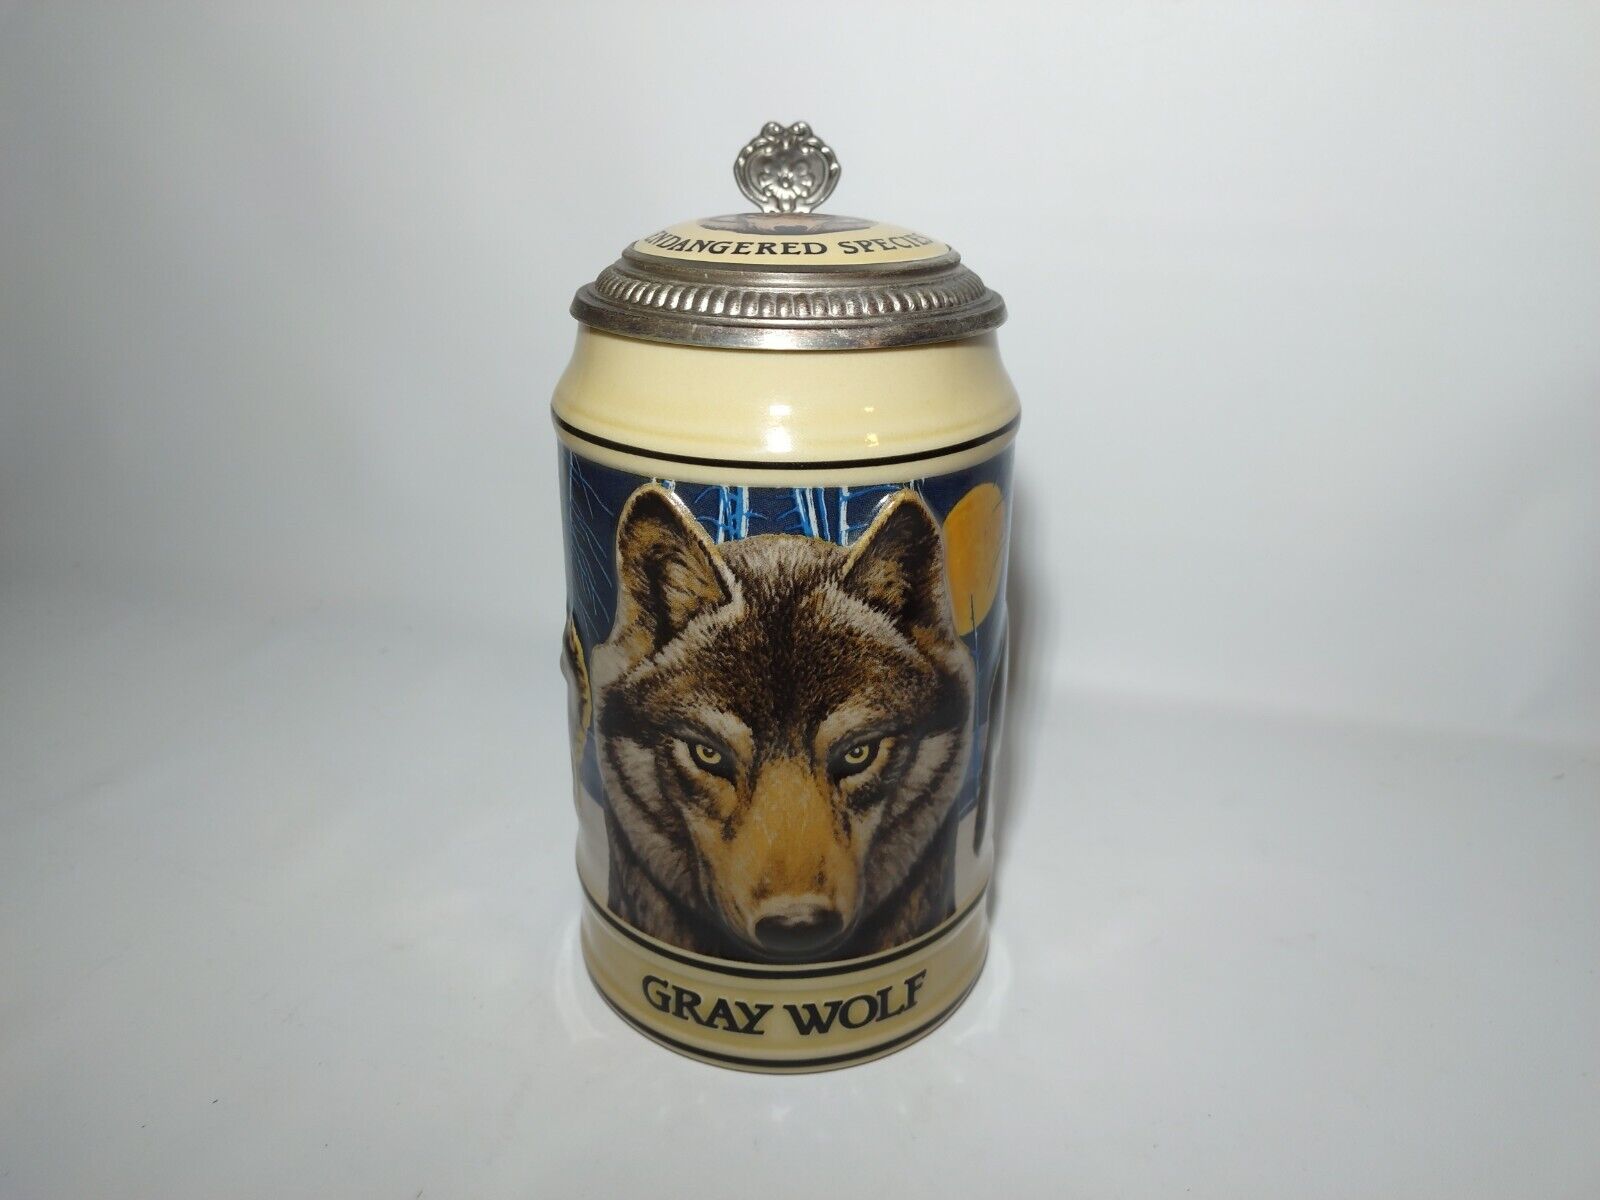 Budweiser Endangered Species Stein Gray Wolf Beer Mug Vintage 1993 w Certificate